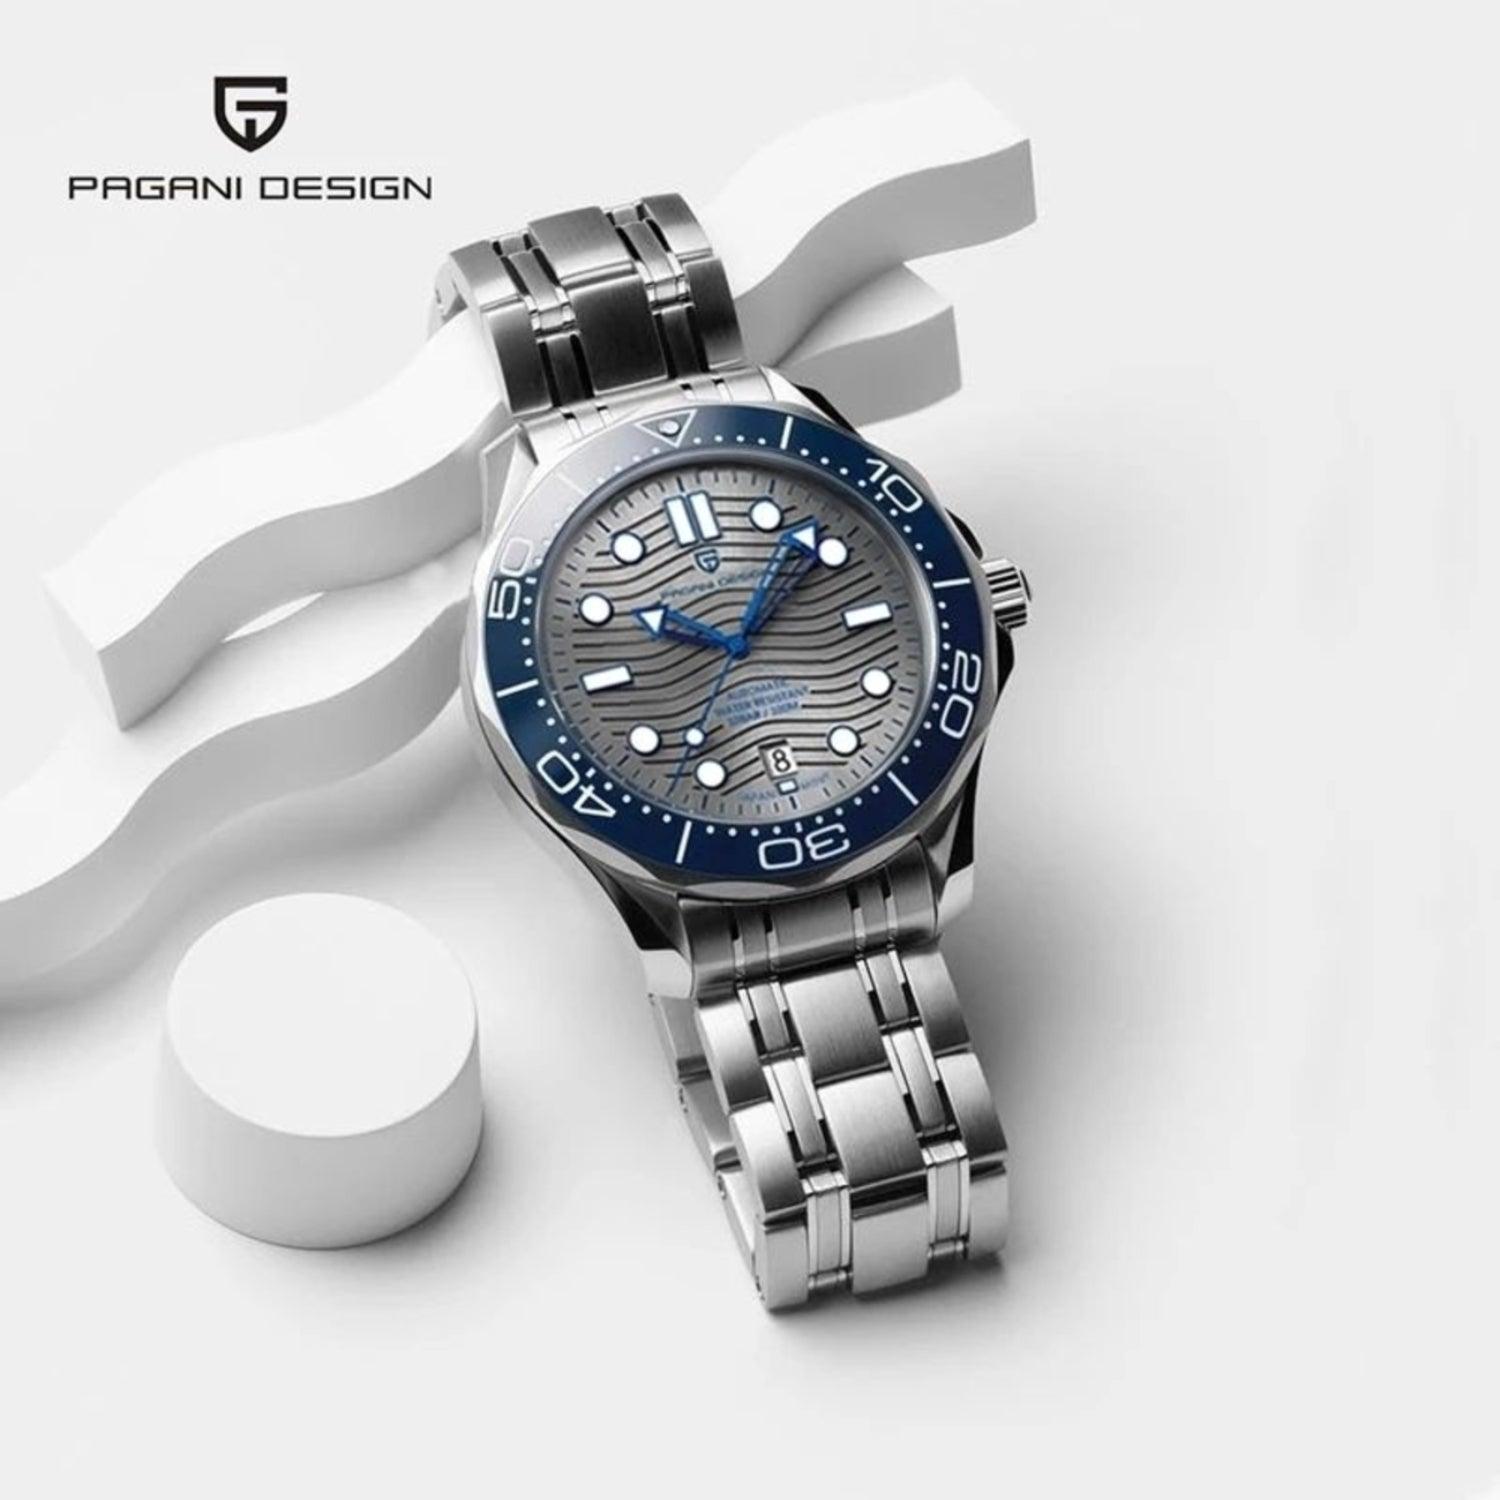 Pagani Design PD-1685 42MM (Japanese NH-35 Automatic Movement) Mechanical Watch 100M Waterproof Dive Watch Sapphire Stainless Steel Bracelet Watch 